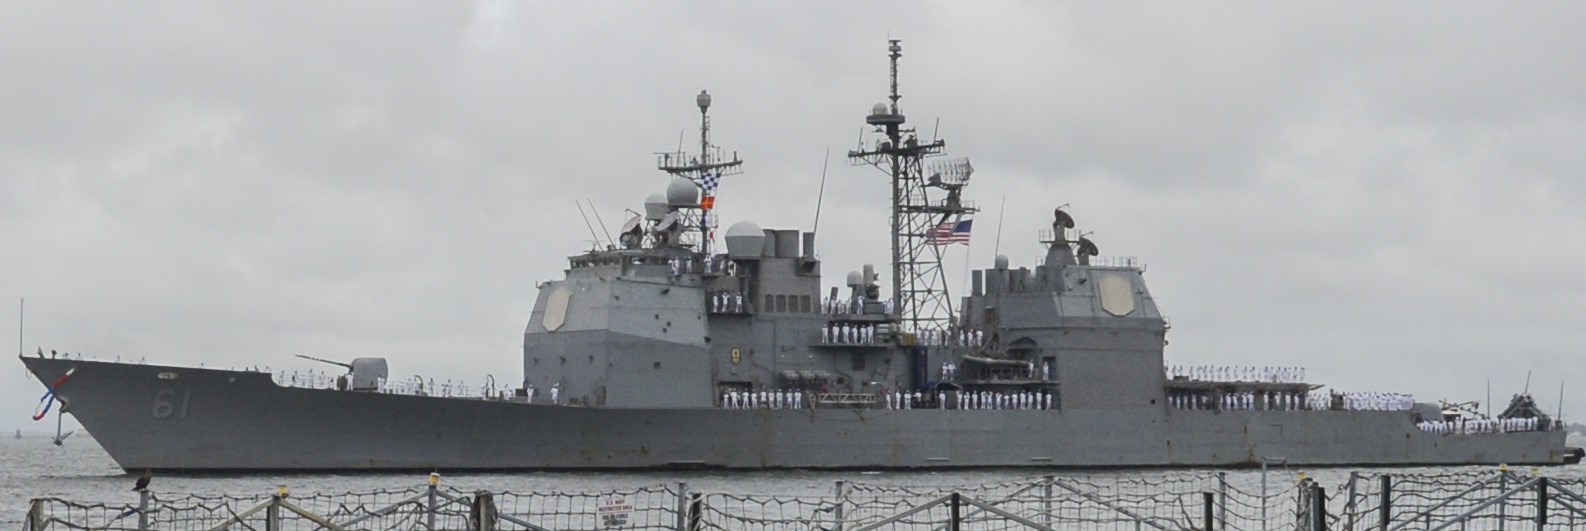 cg-61 uss monterey ticonderoga class guided missile cruiser aegis us navy 123